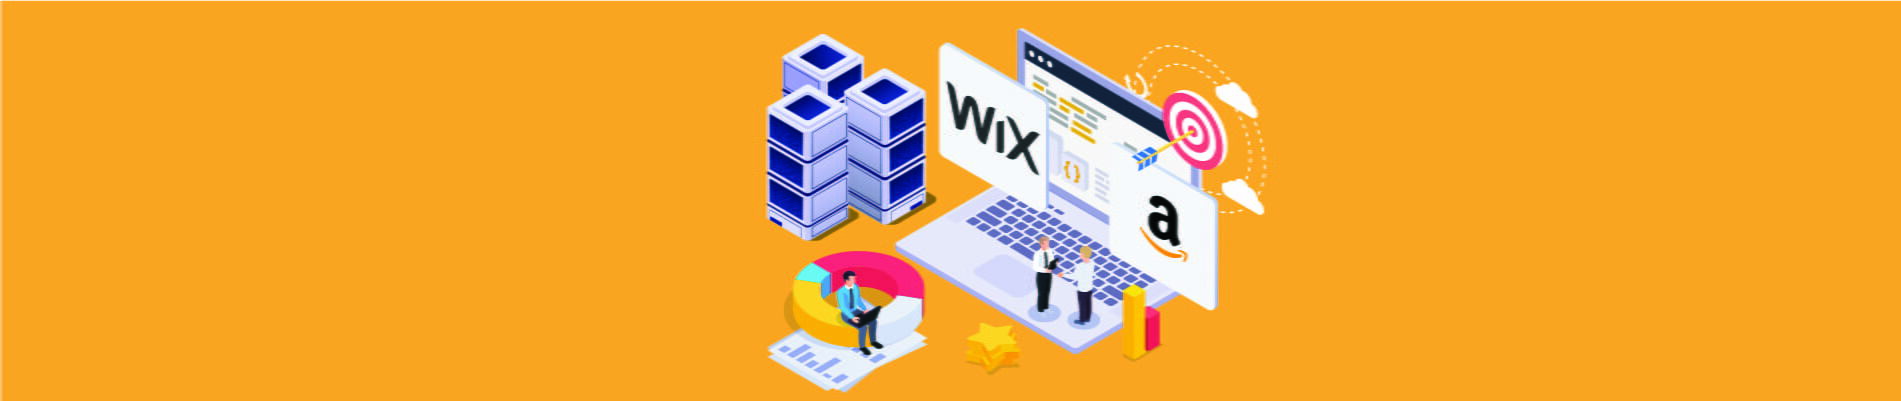 Wix Amazon Integration